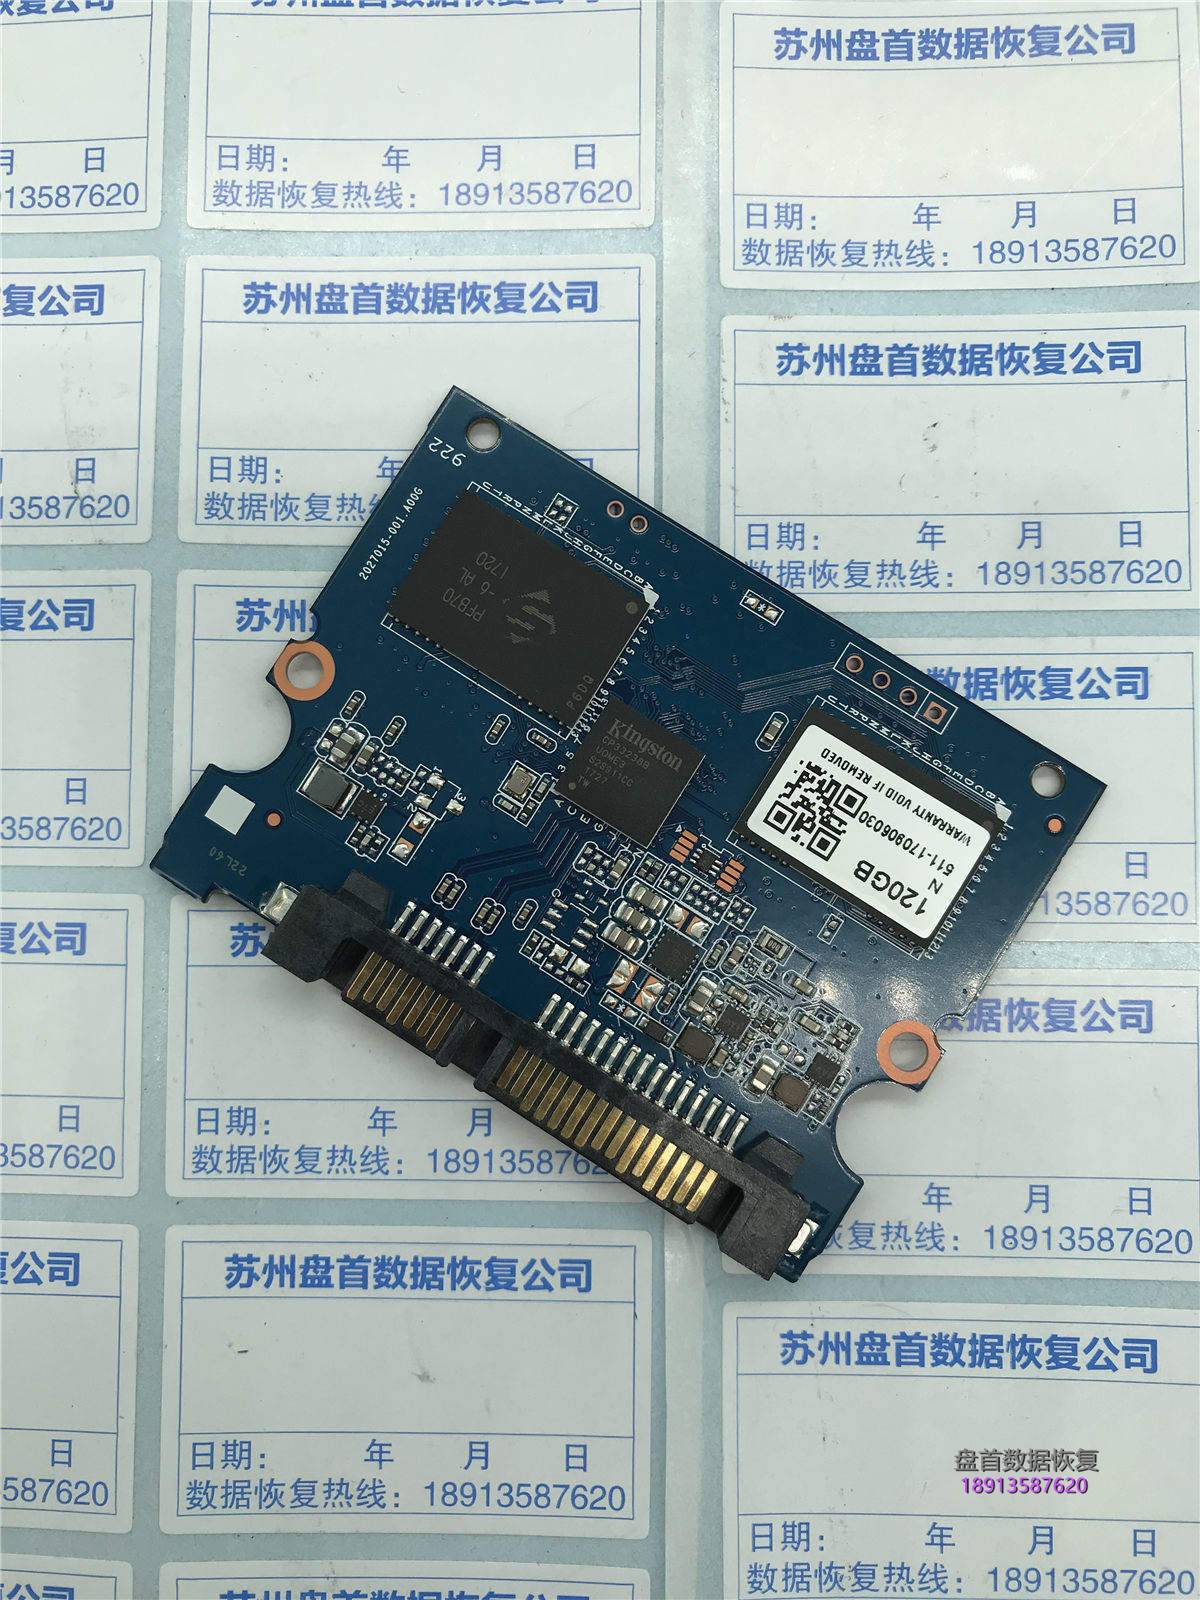 PS3111芯片的SSD固件门通病常见掉盘故障现象